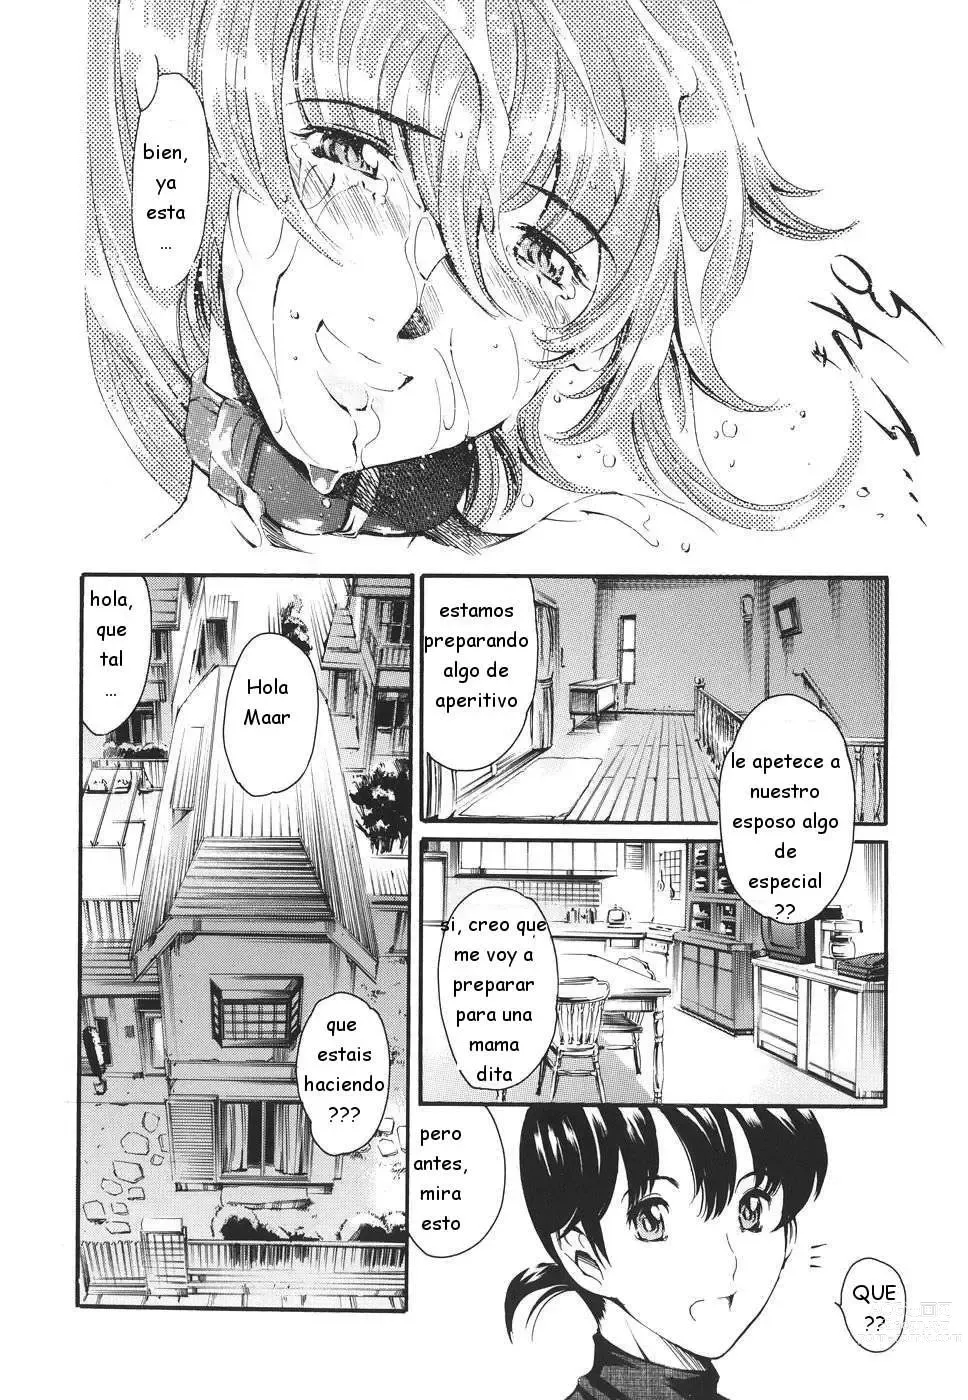 Page 189 of manga Katei no Jijou - Familys circumstances